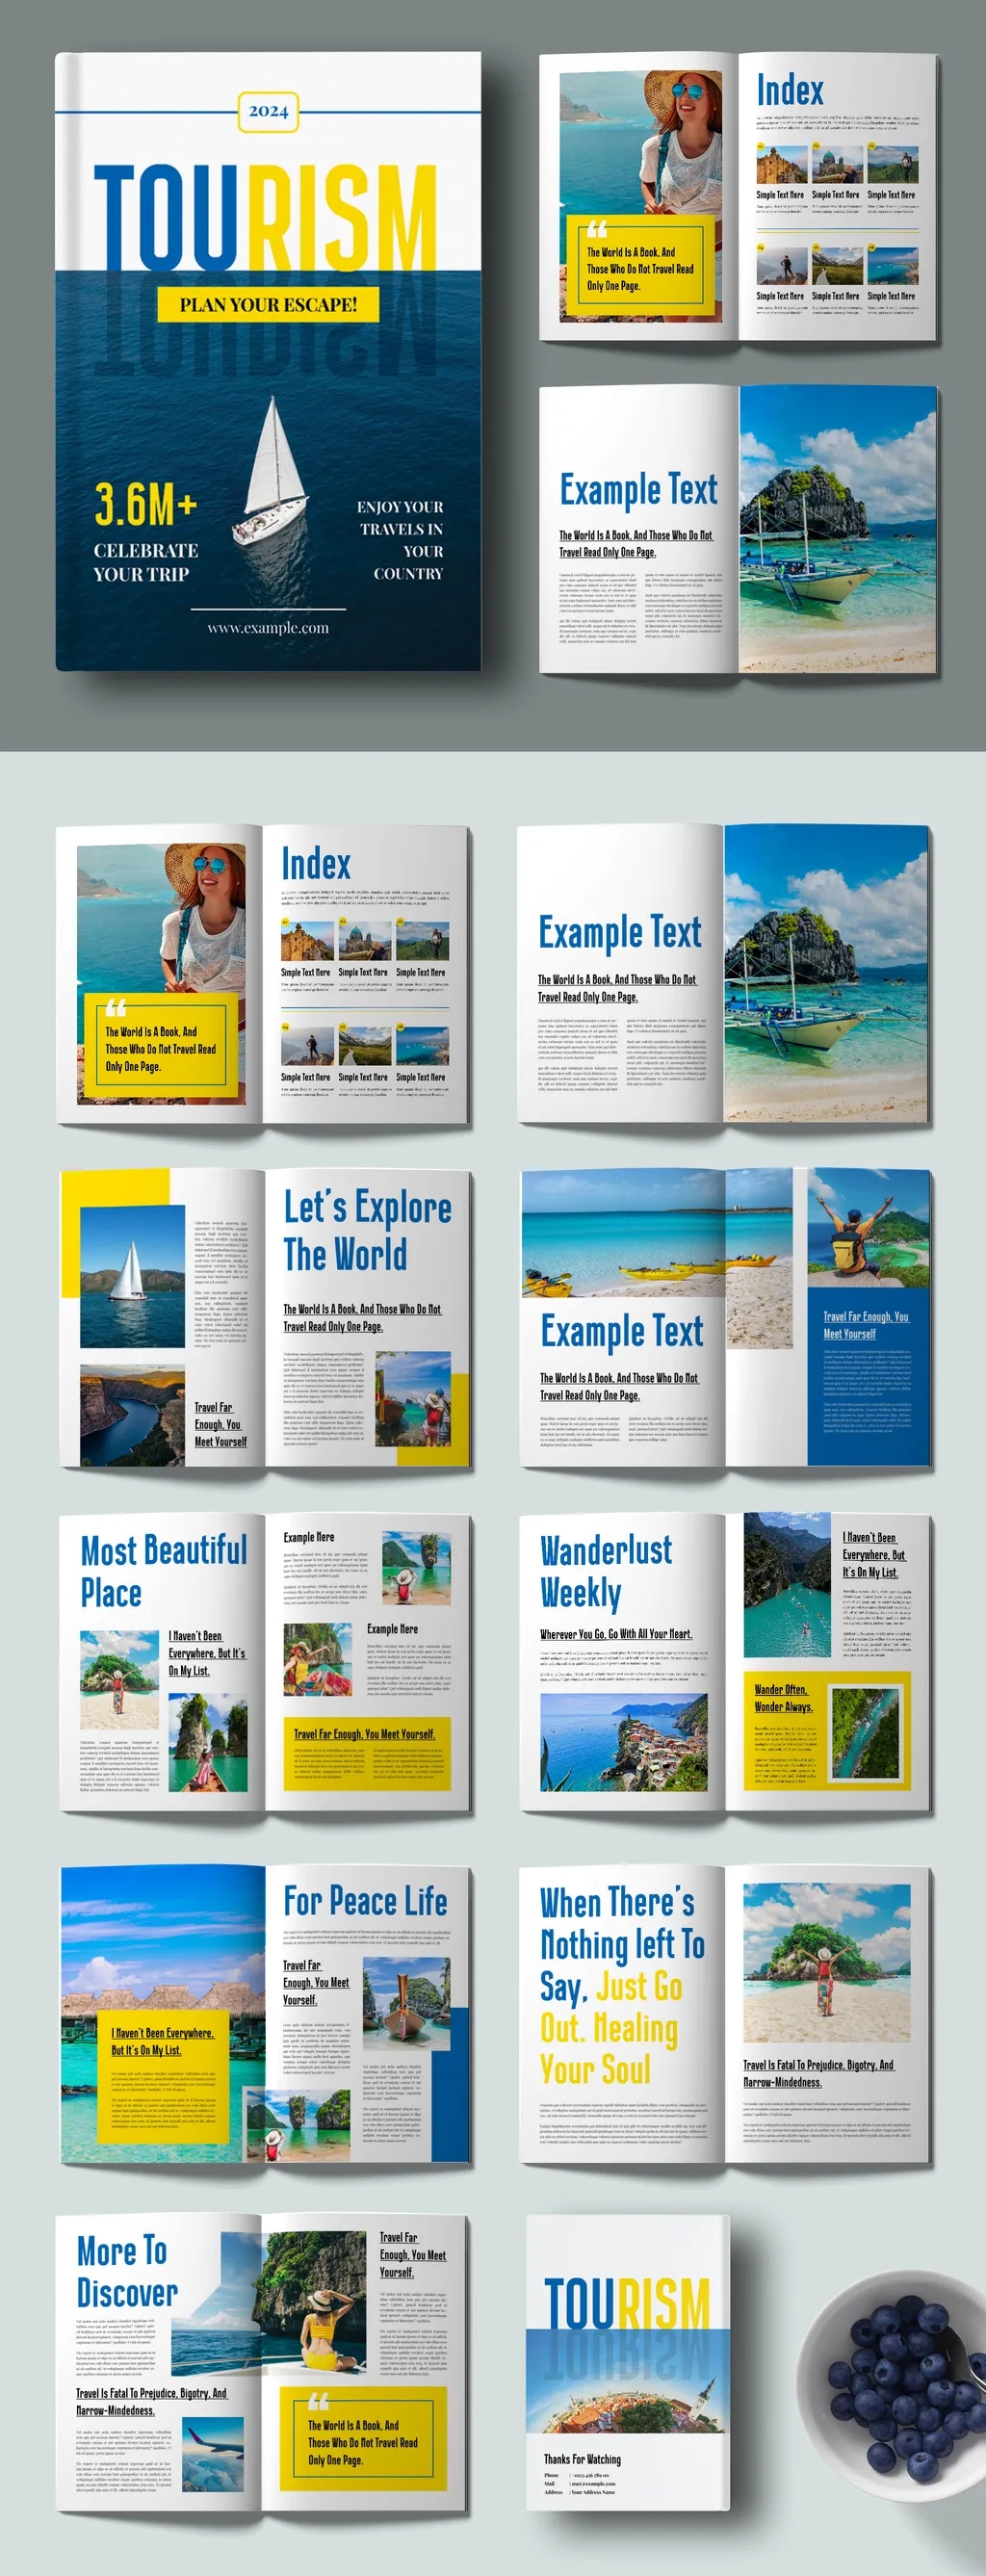 Adobestock - Travel Magazine Template Layout 722994500